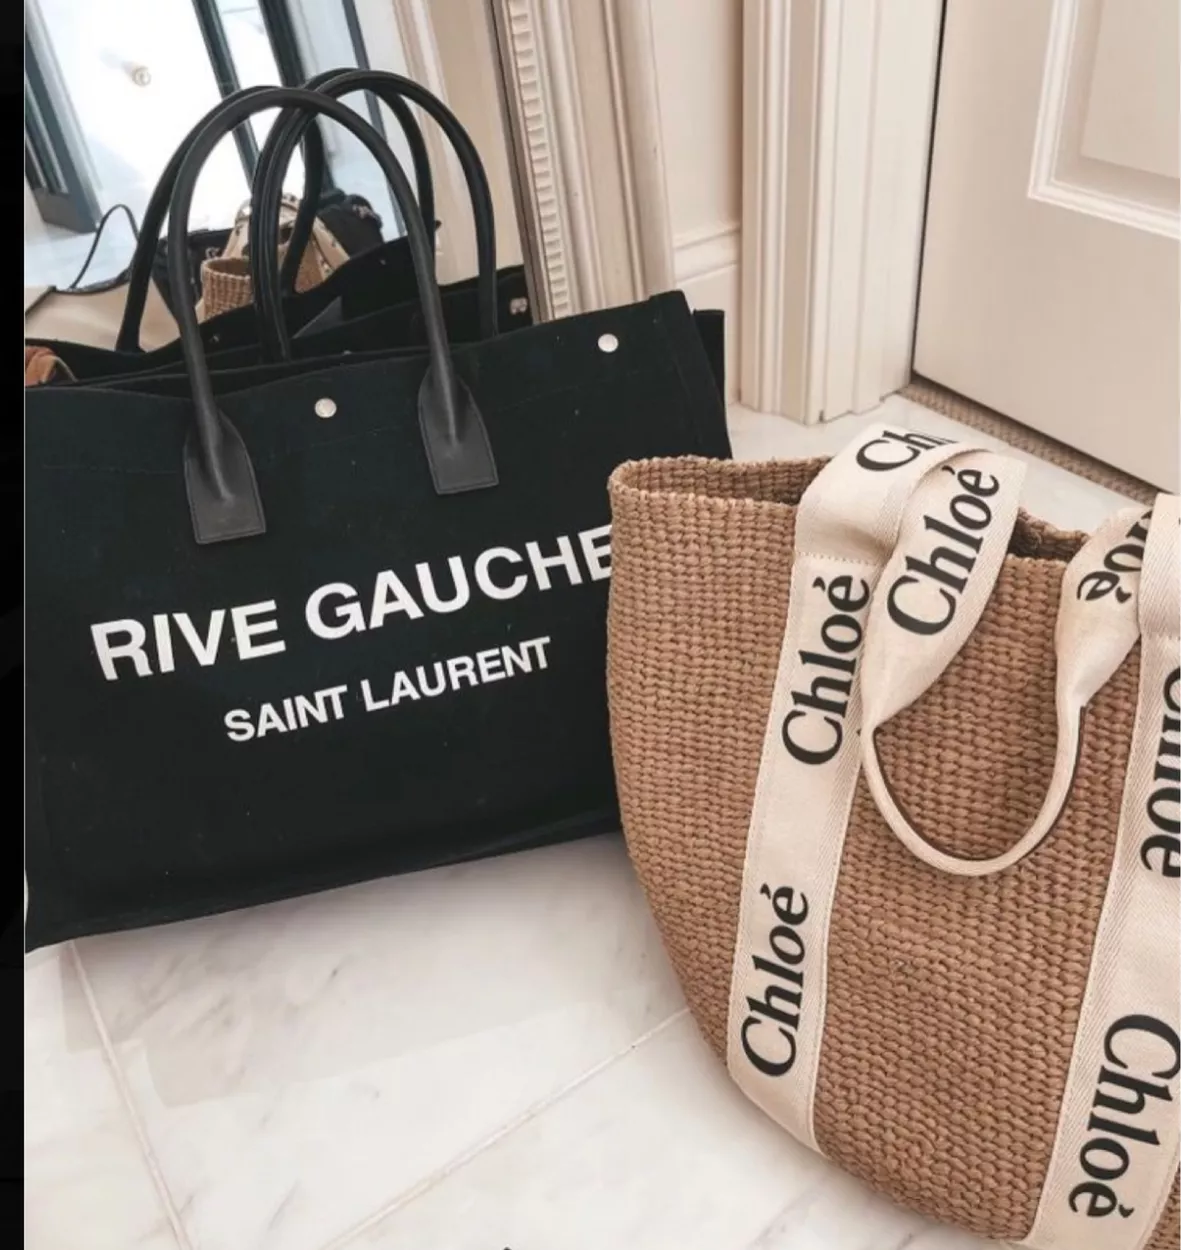 Balenciaga Gucci hourglass bag #dhgate #LTKsalealert #LTKitbag